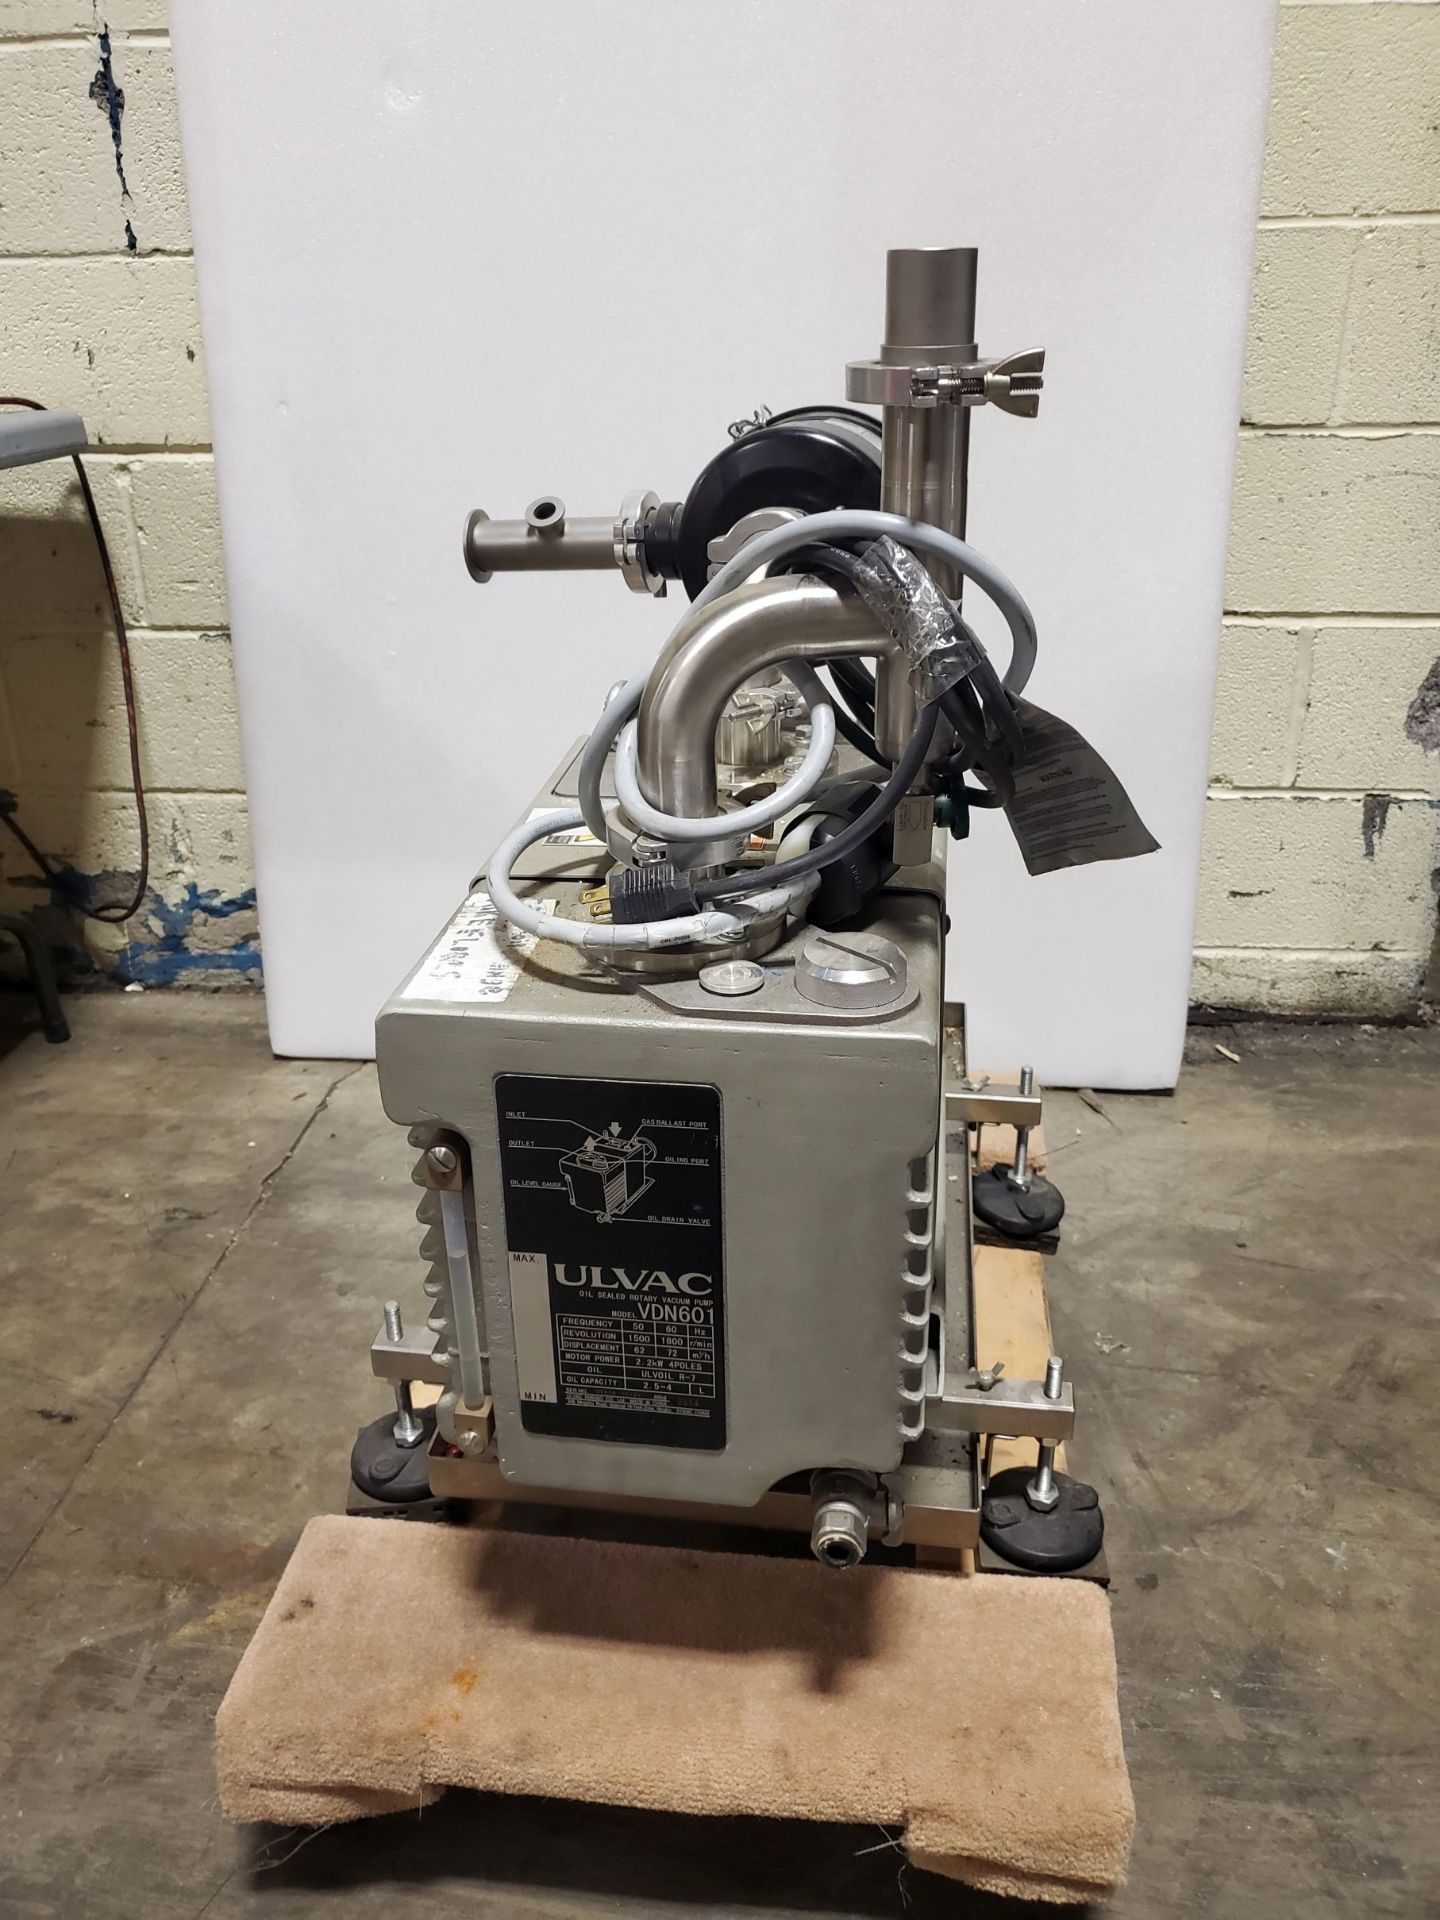 ULVAC Oil Sealed Rotary Vacuum Pump, Model VDN601 - Image 4 of 6